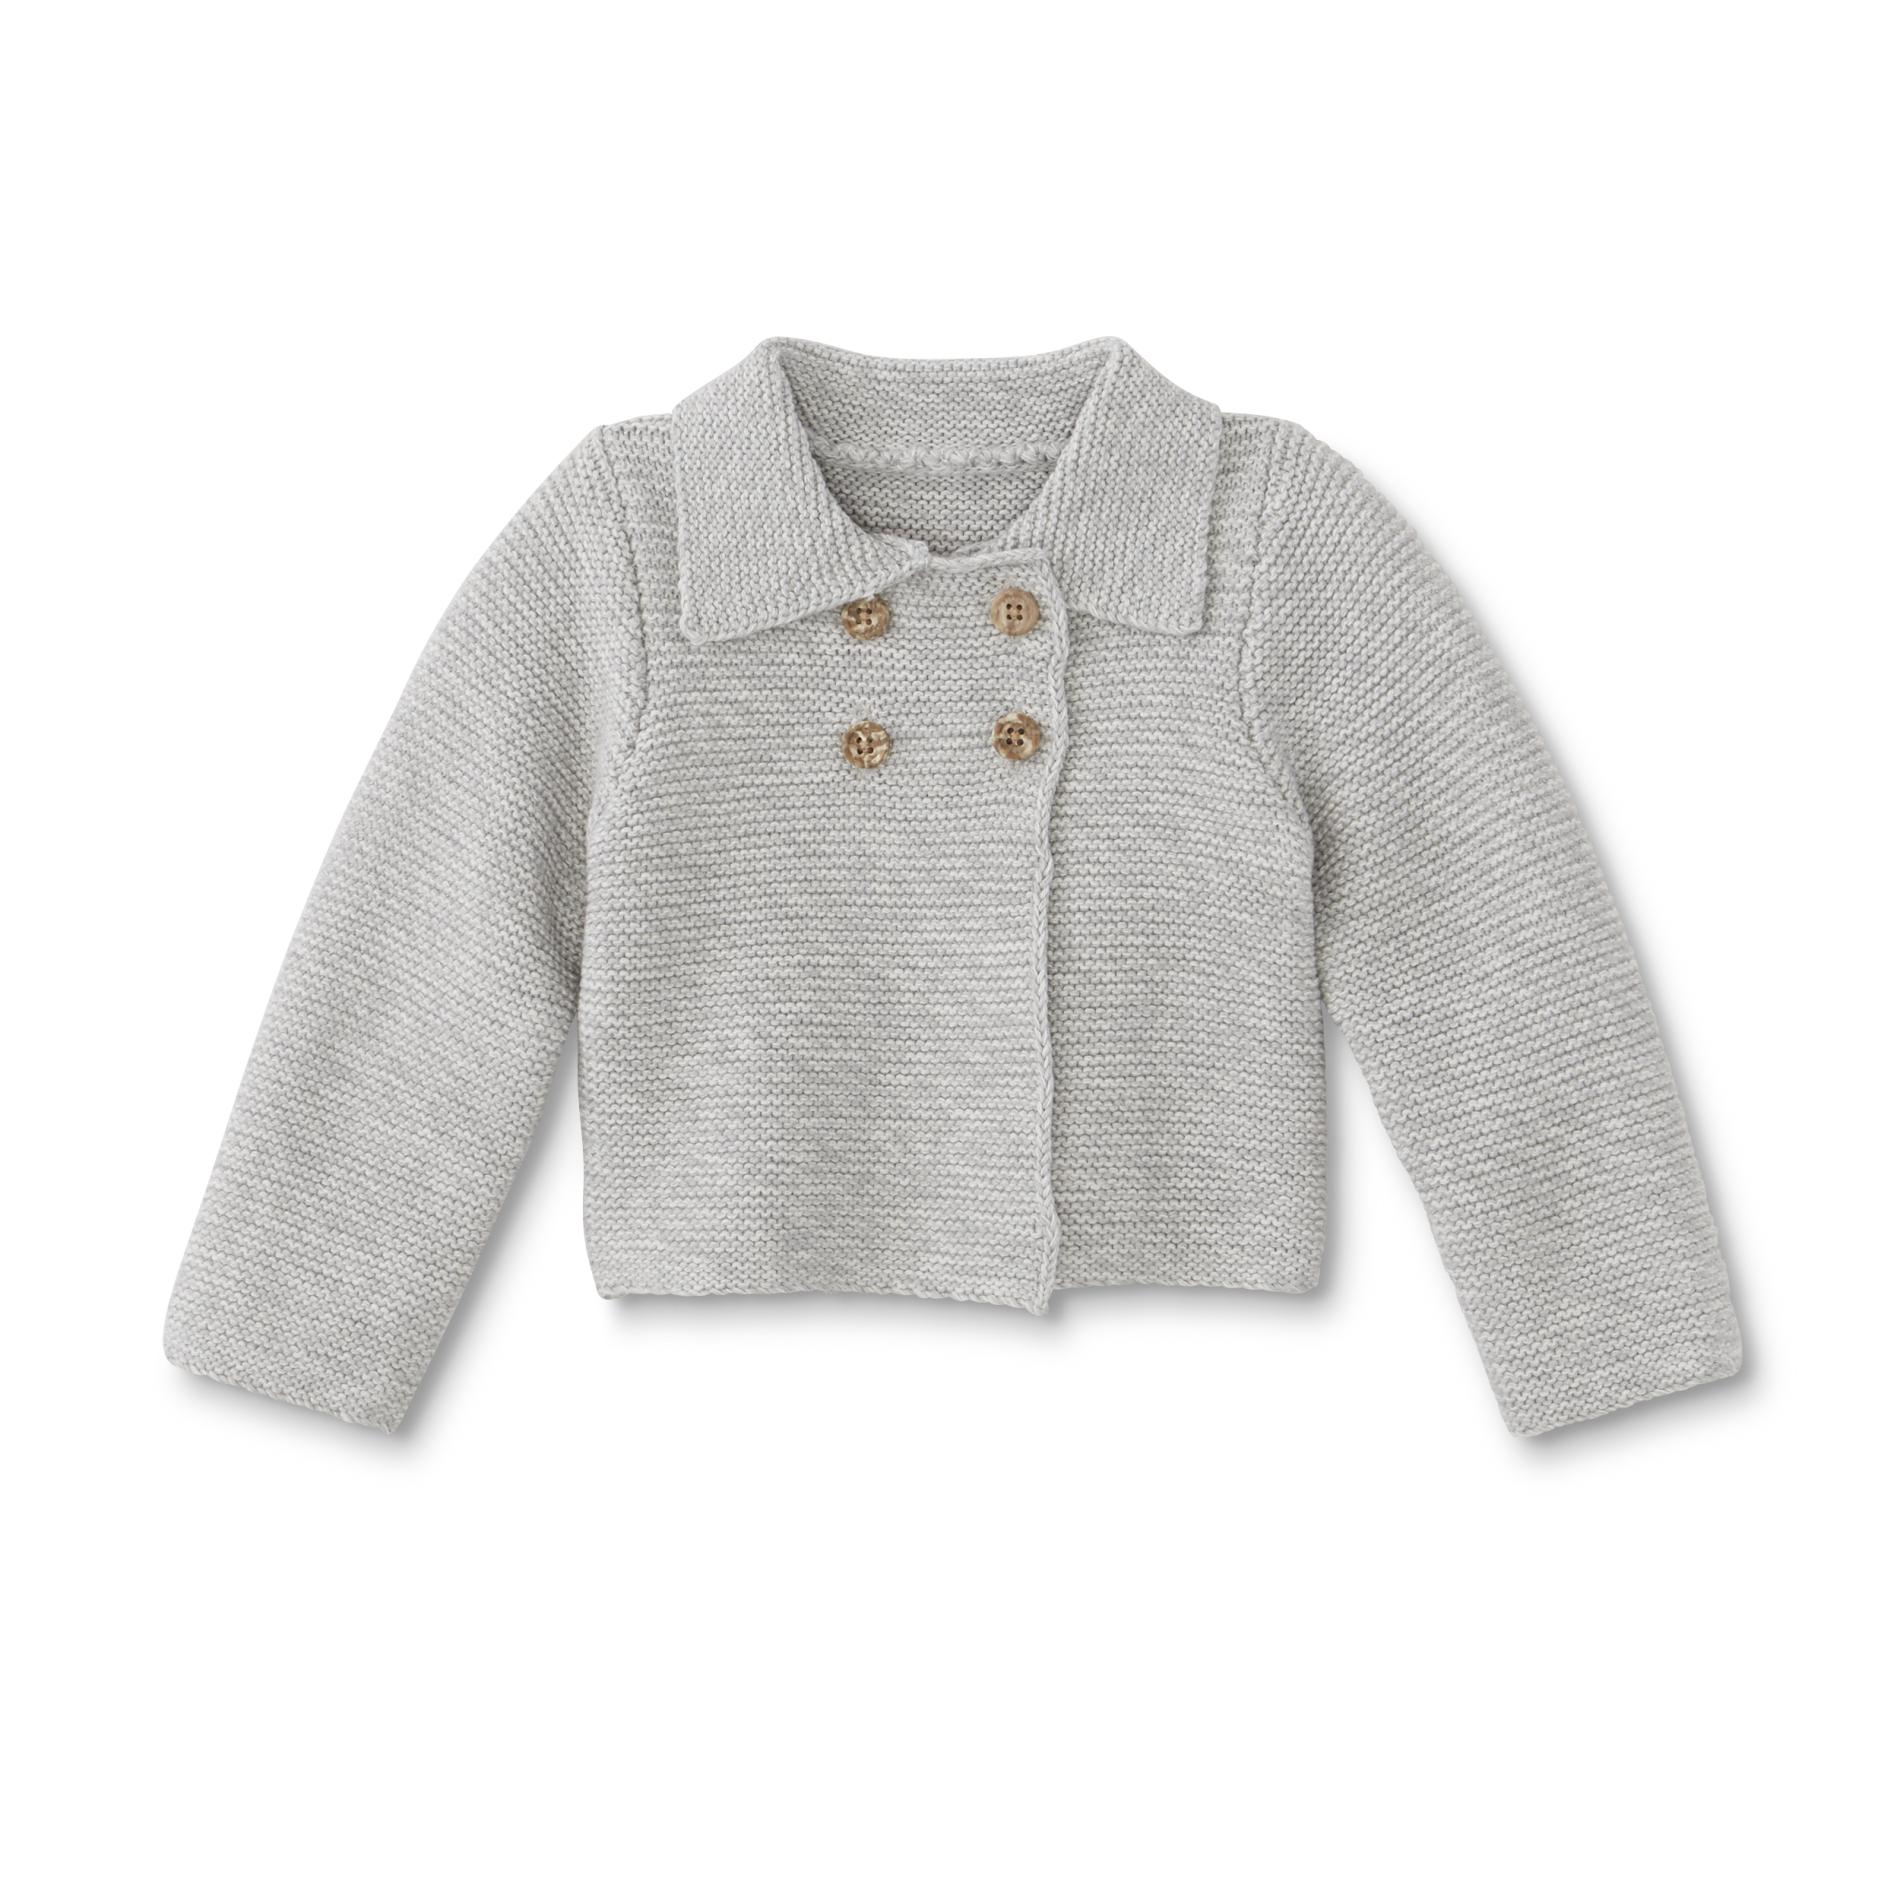 Little Wonders Newborn & Infant Girl's Sweater